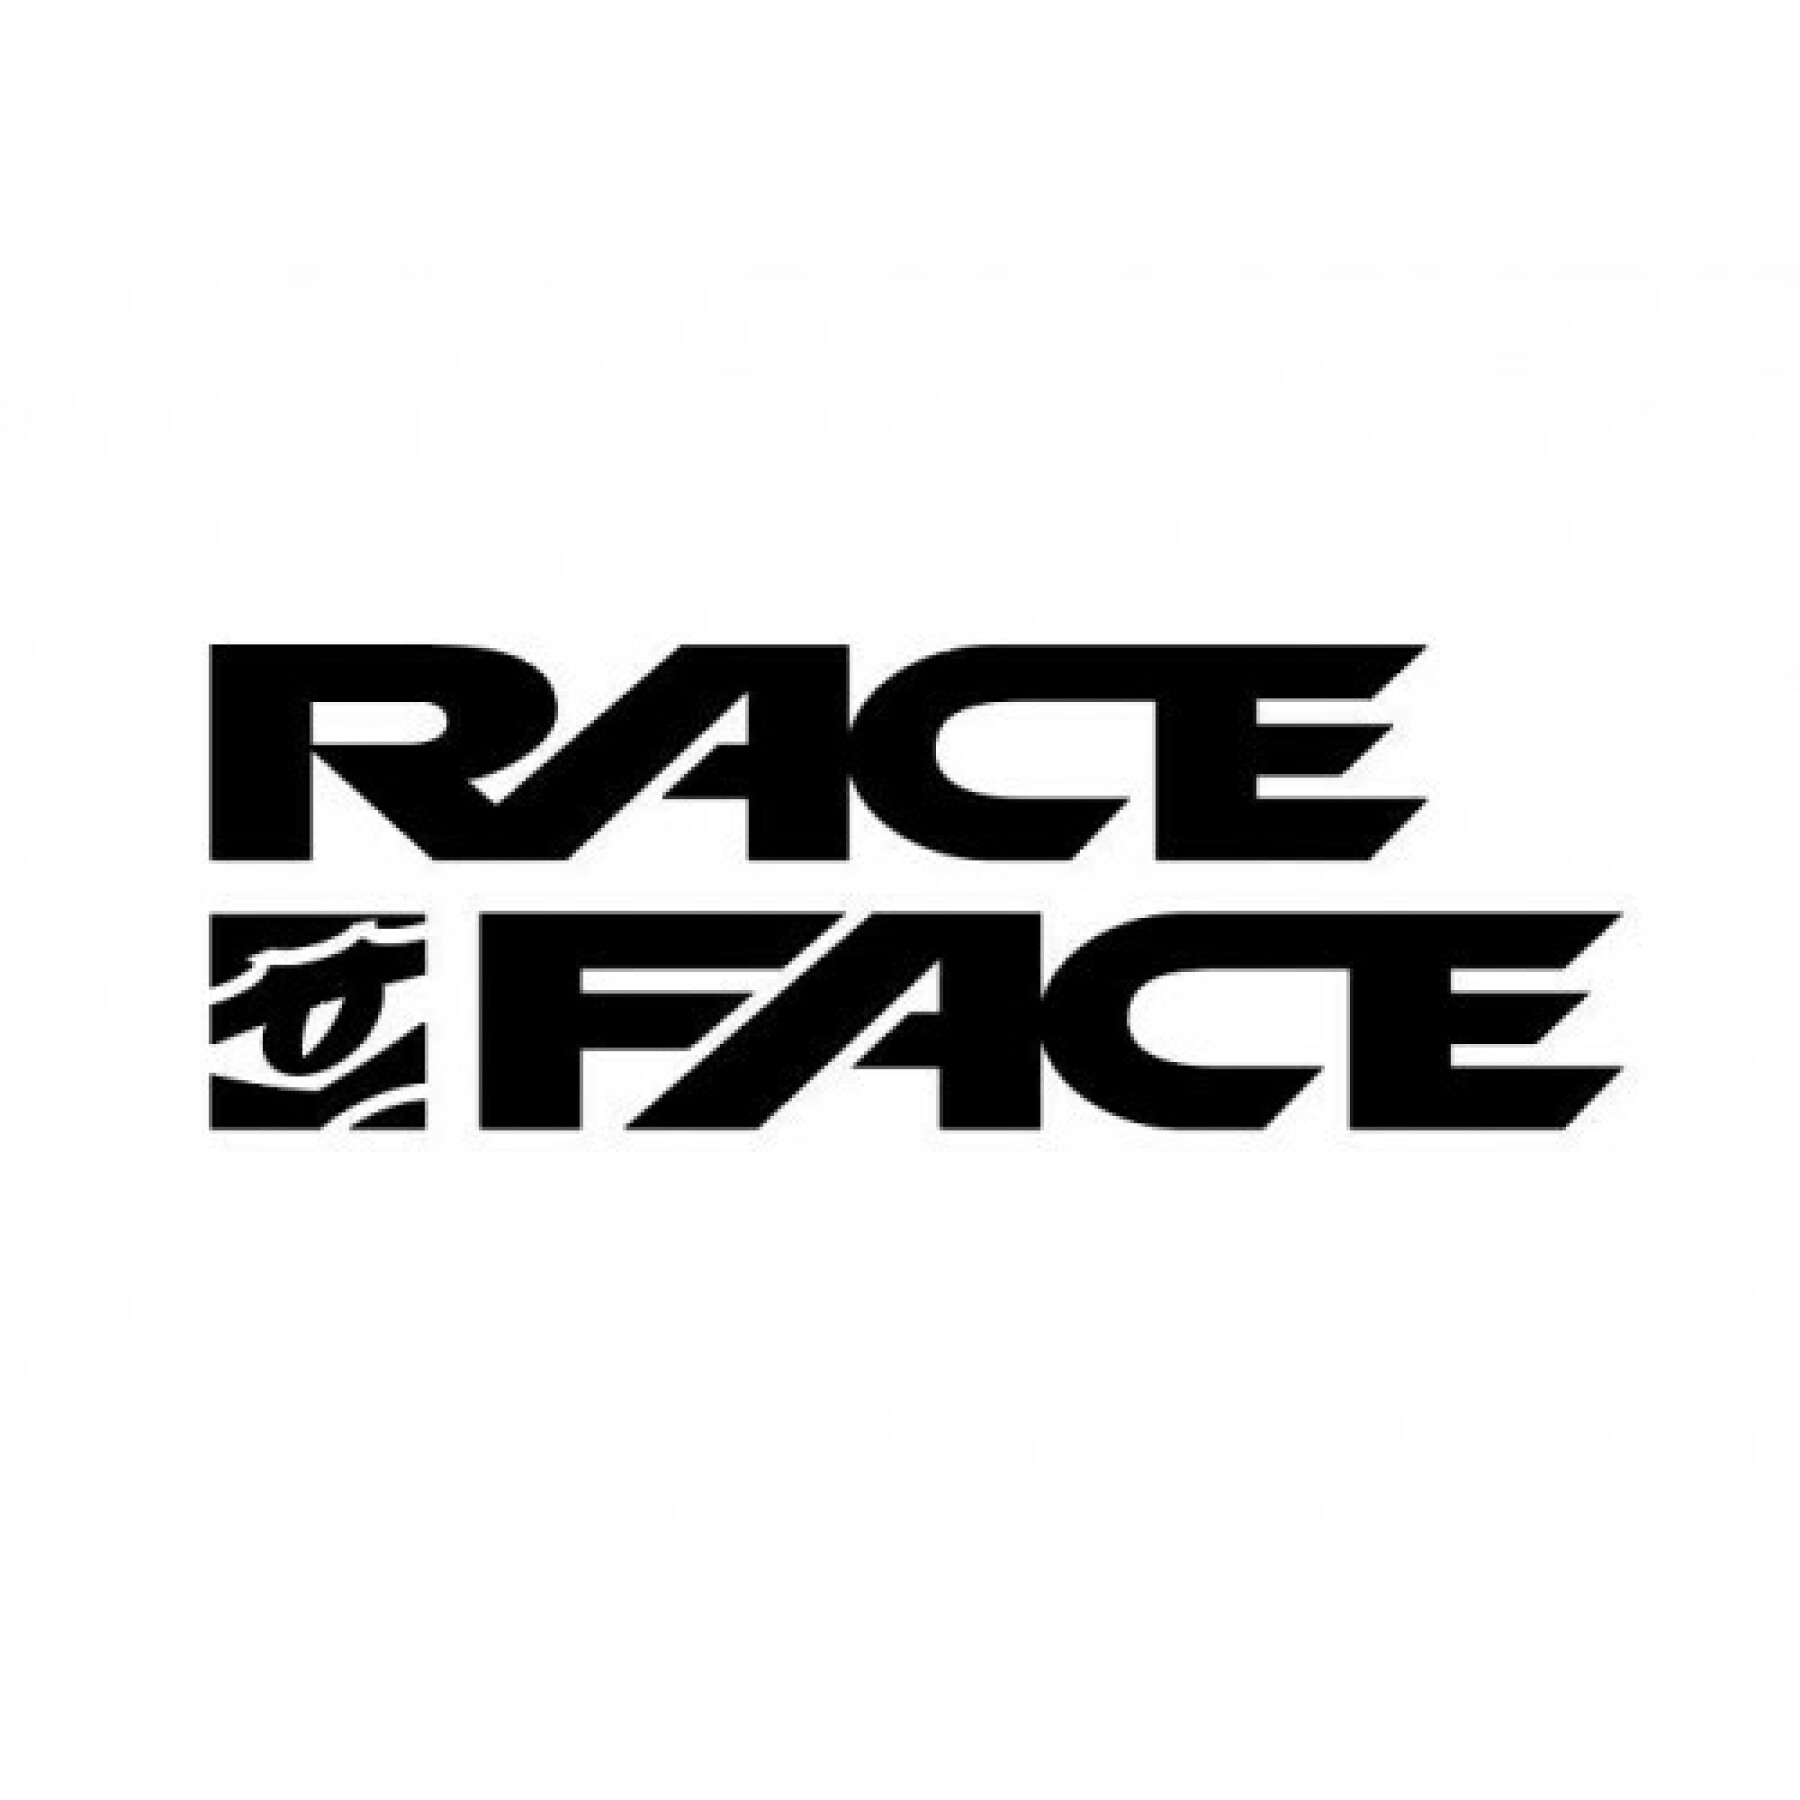 Felge Race Face arc offset - 35 - 27.5 - 28t